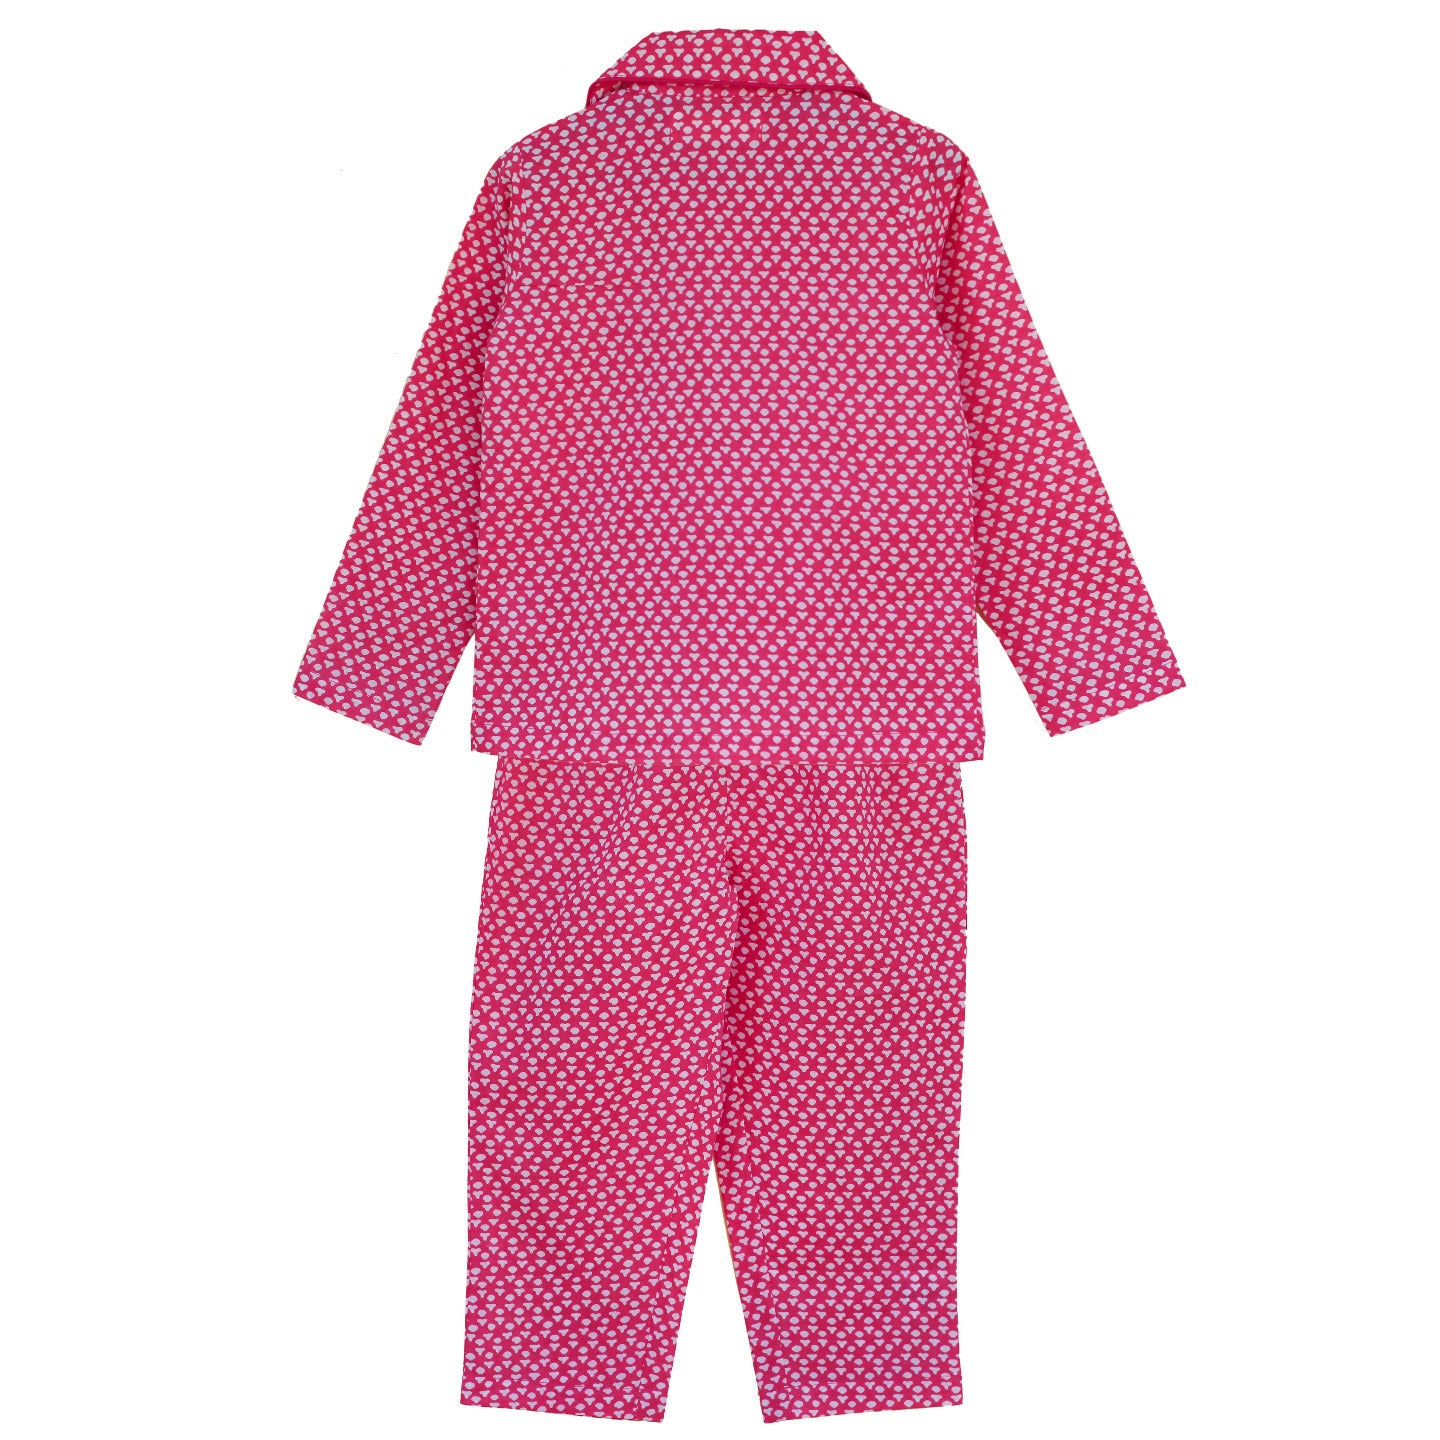 Printed Girl's Night Suit Buti Pink